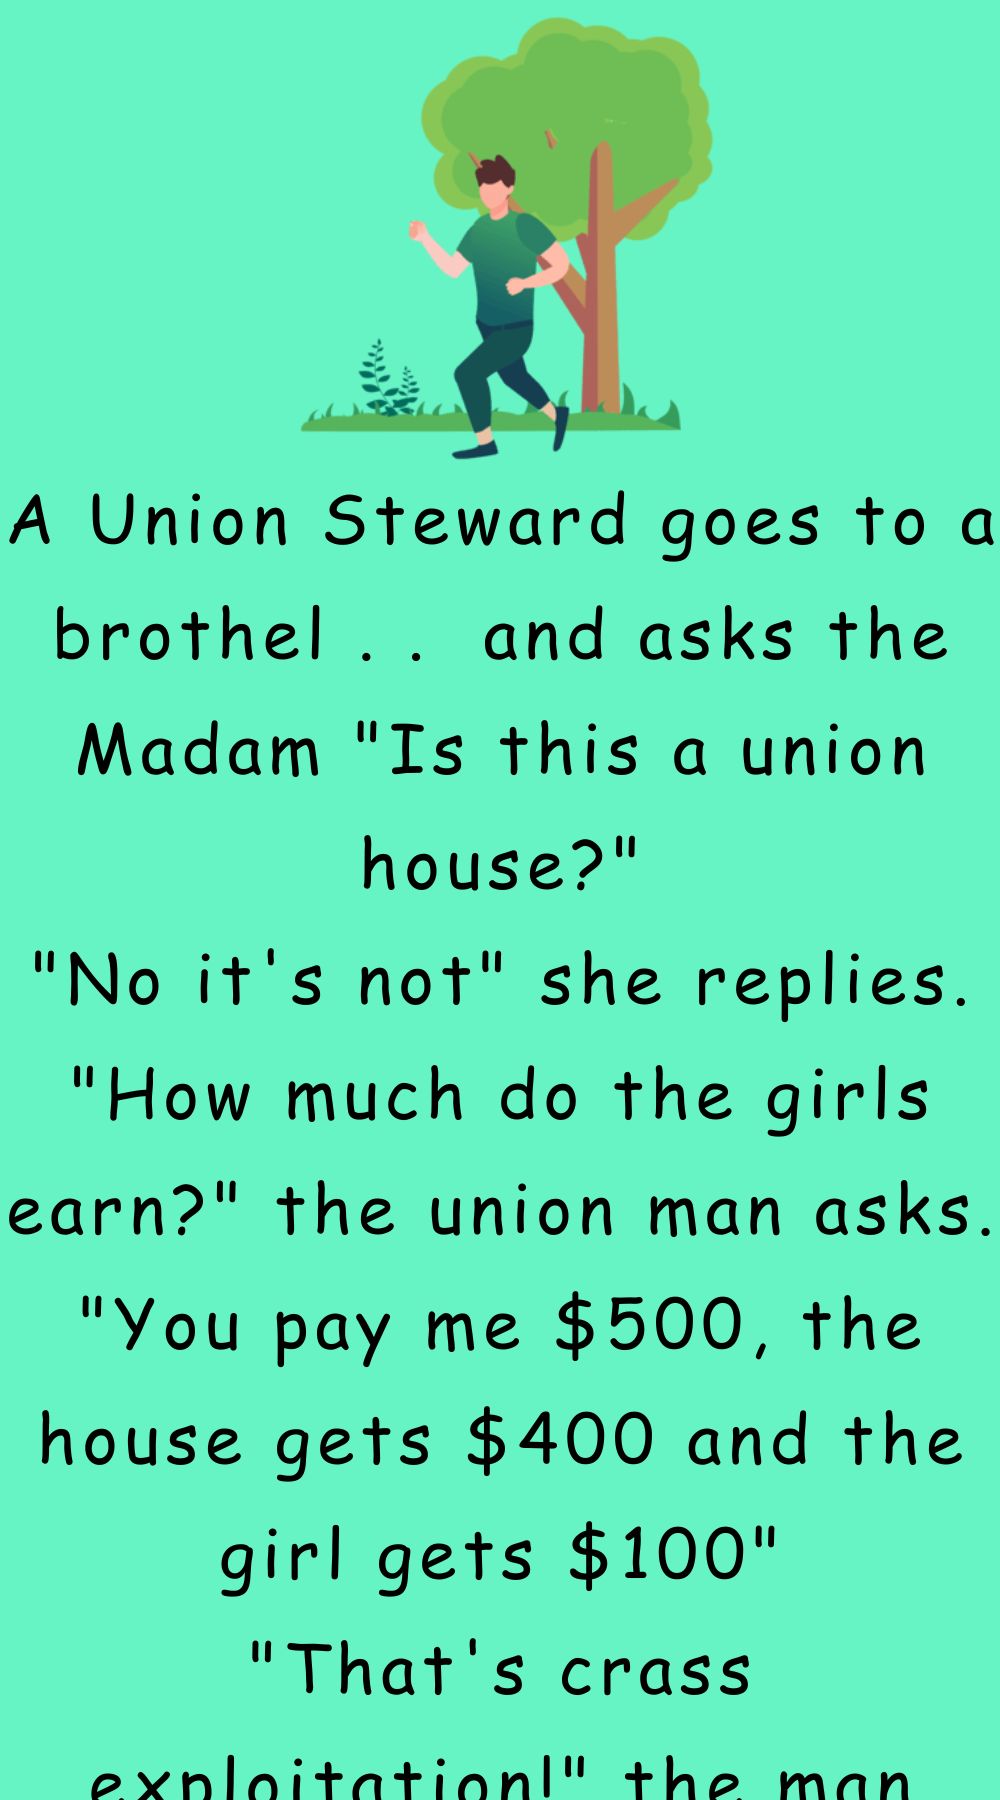 A Union Steward goes to a brothel 